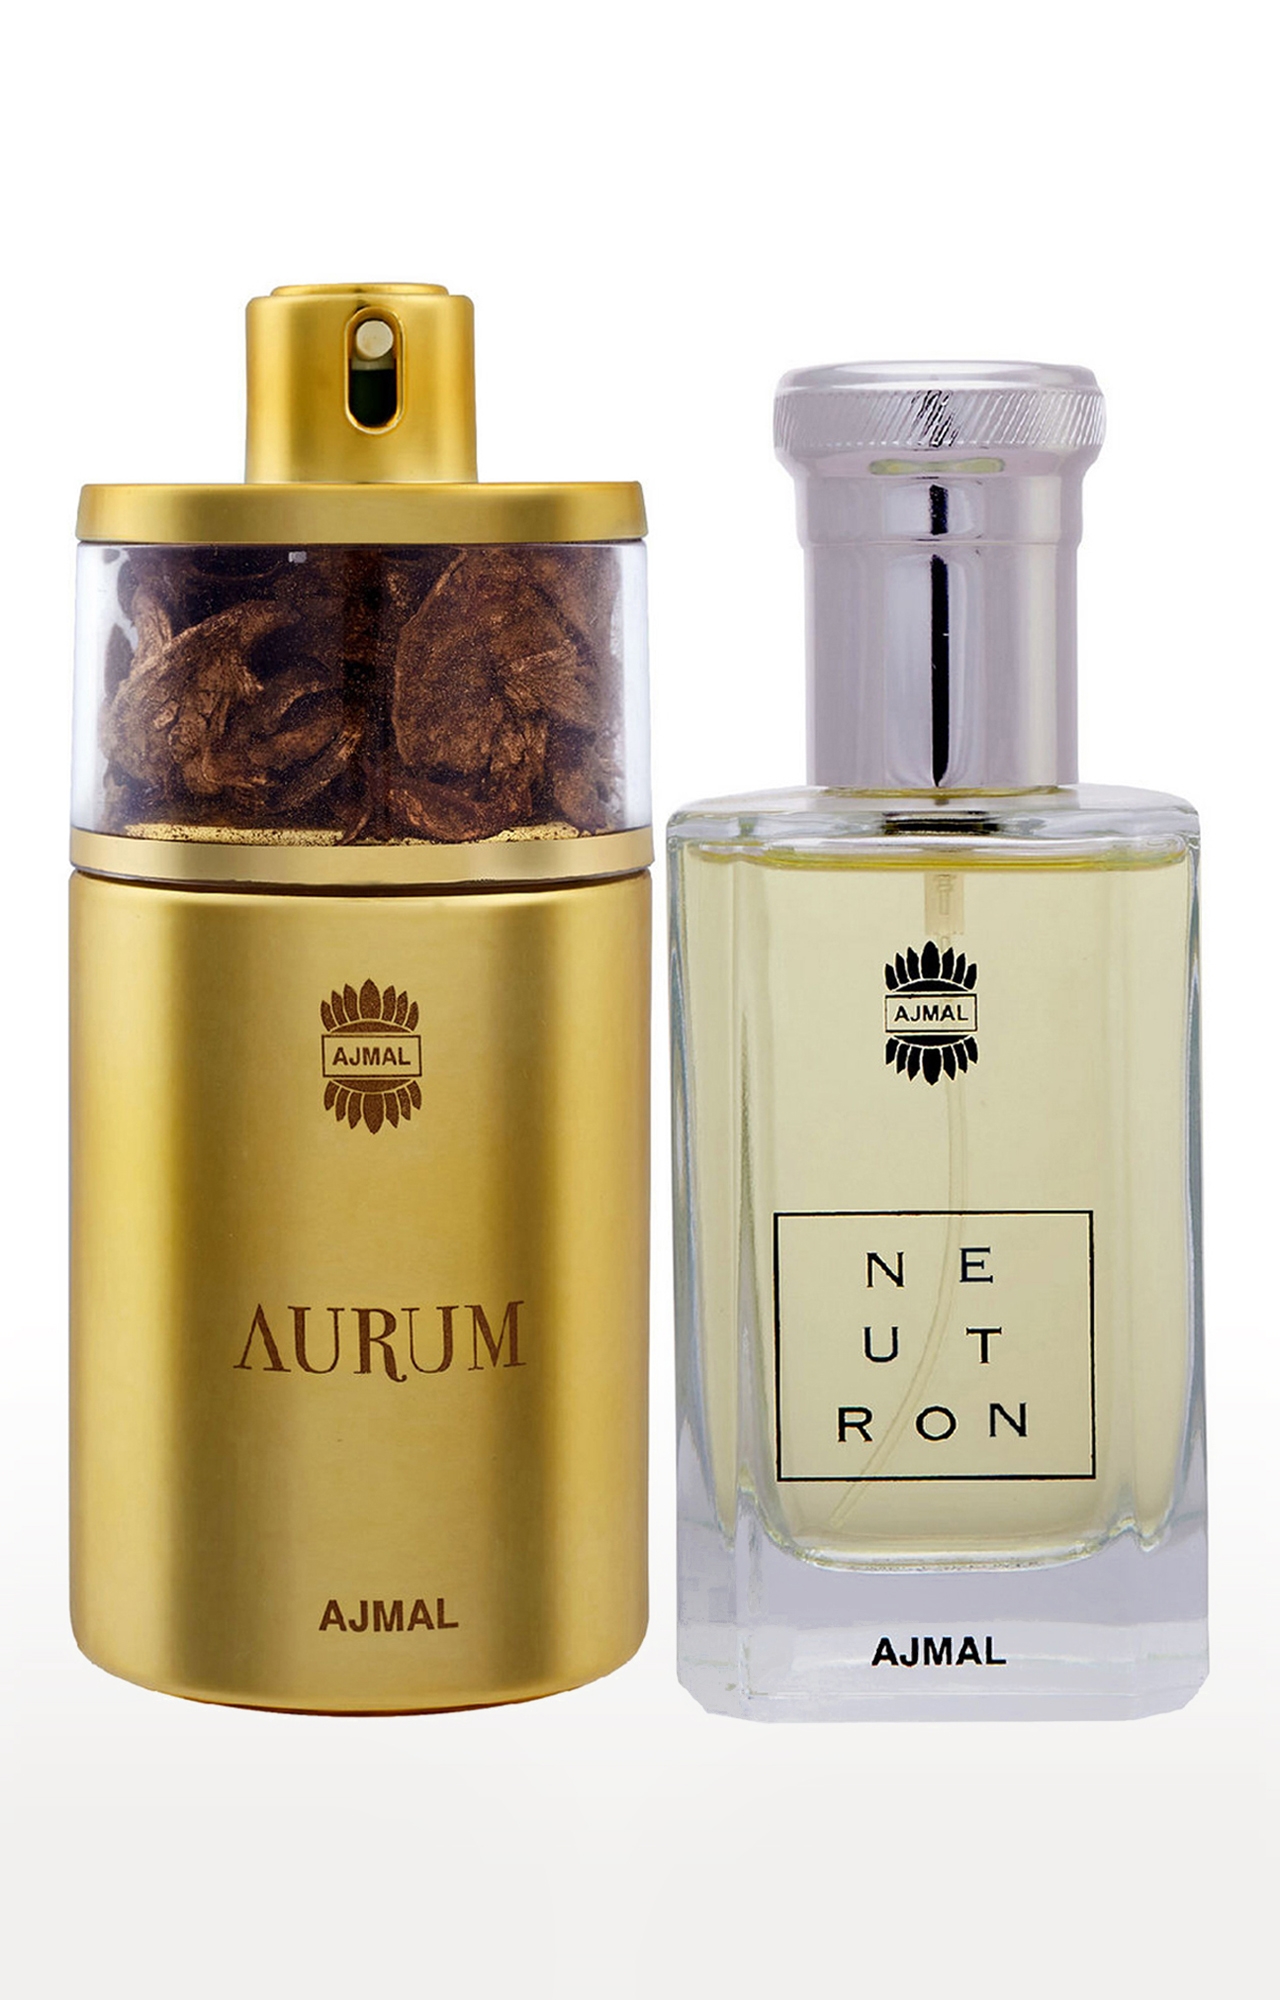 Ajmal Aurum EDP Fruity Perfume 75ml for Women and Neutron EDP Fruity Perfume 100ml for Men